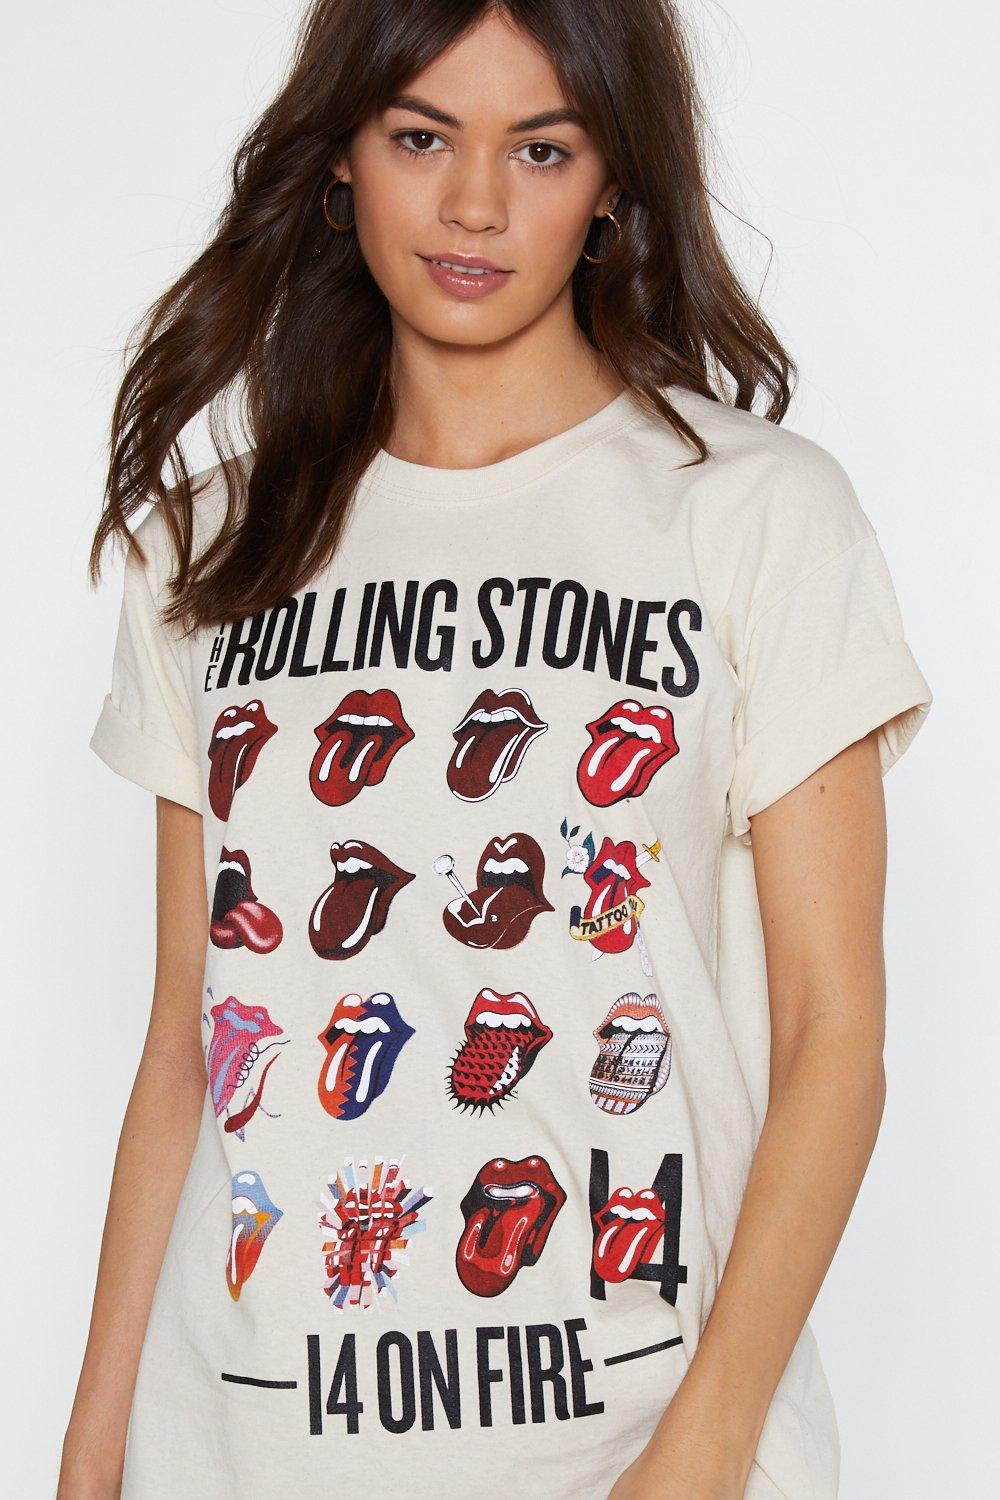 rolling stones shirt